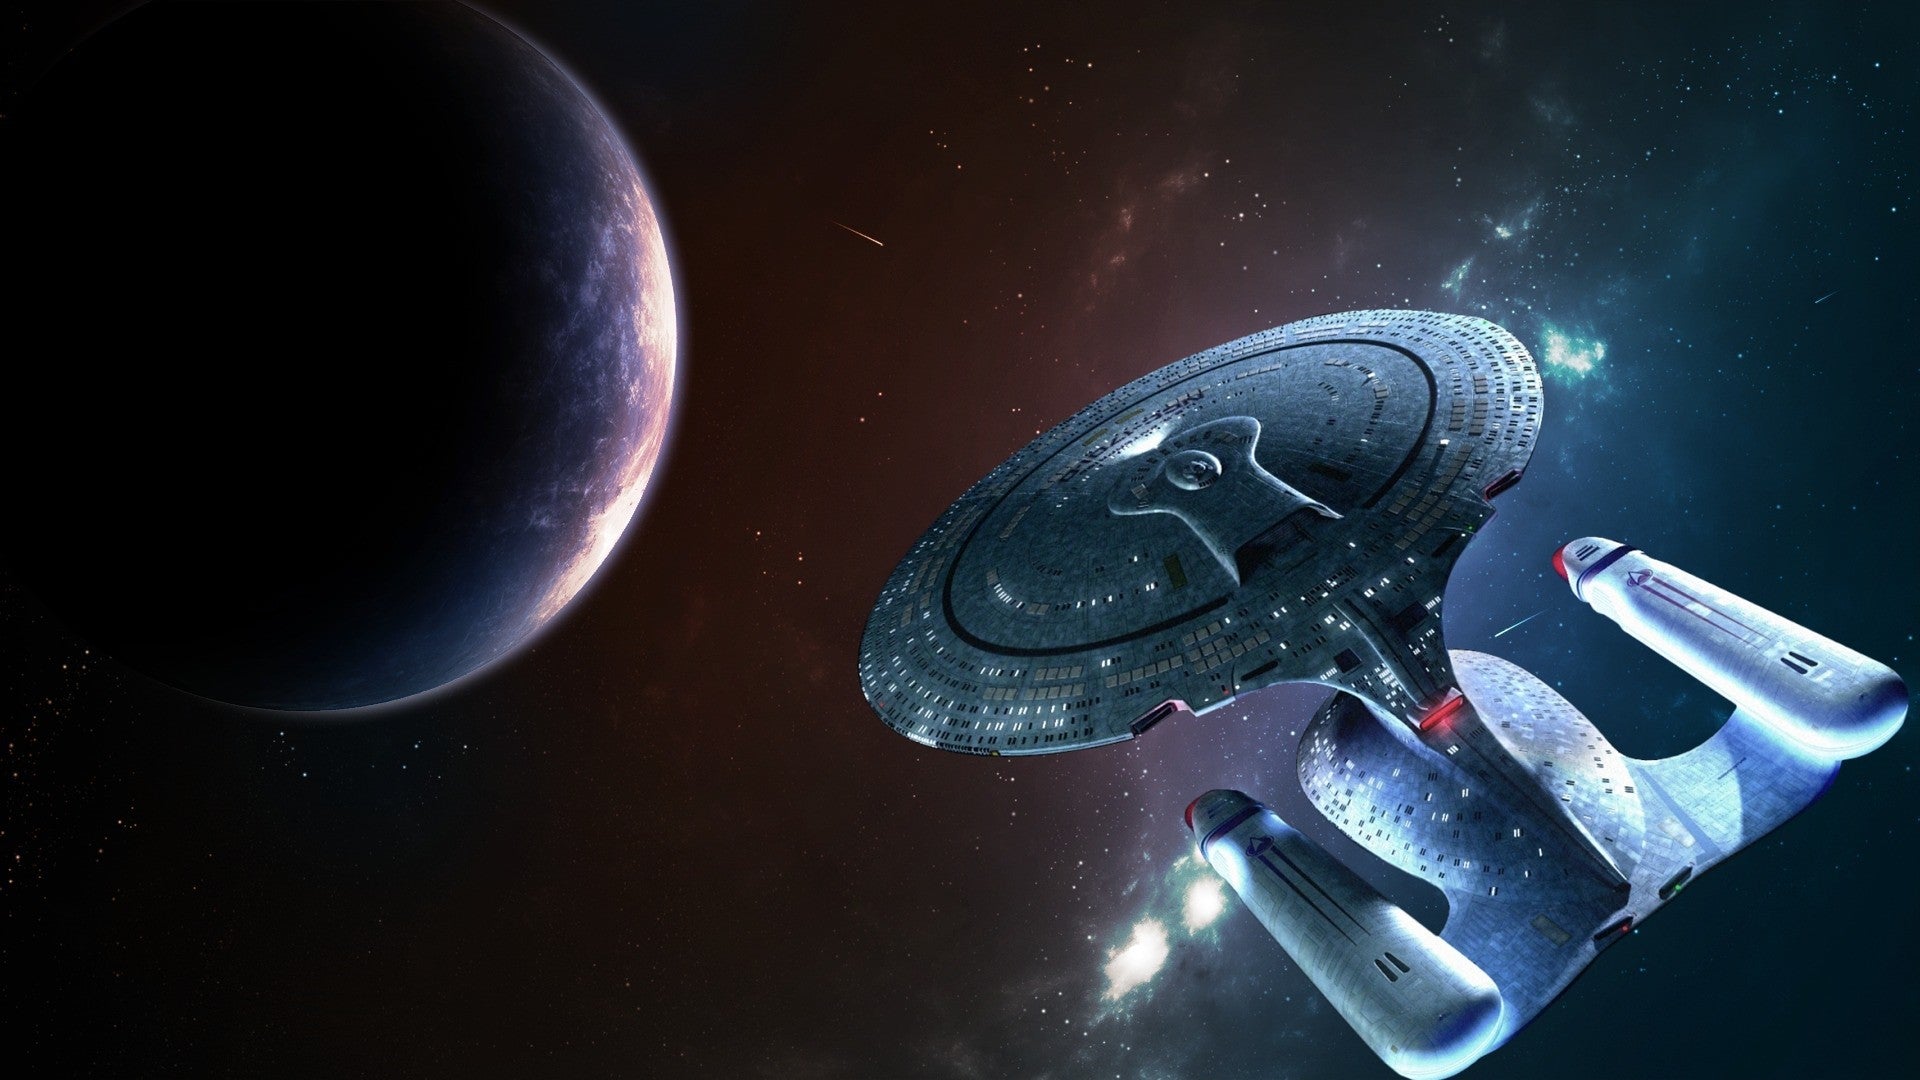 Star Trek: The Next Generation: The Complete Series - Seasons 1-7